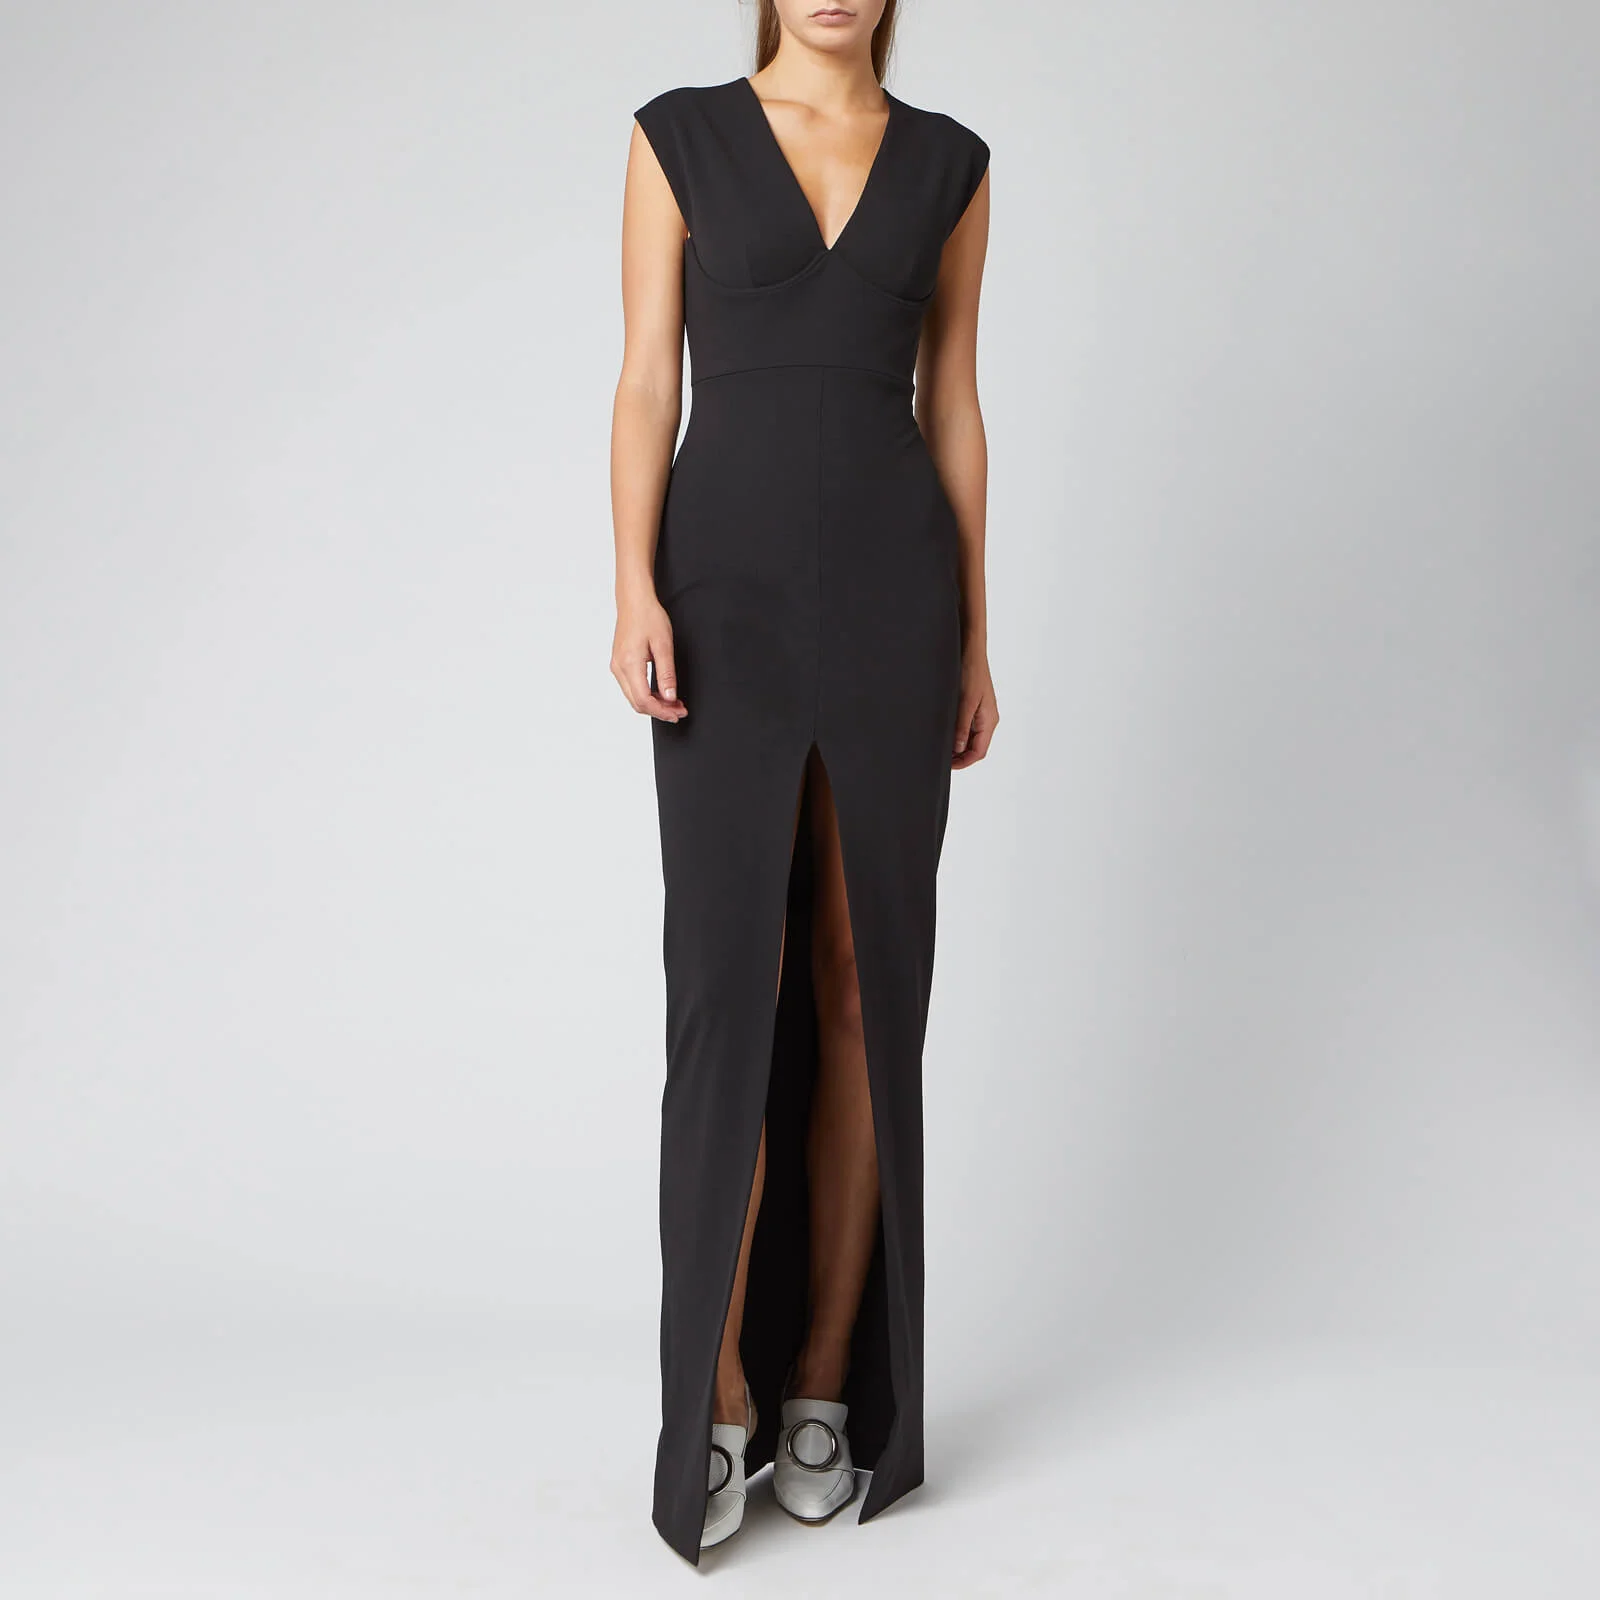 Solace London Women's Ziva Maxi Dress - Black Image 1